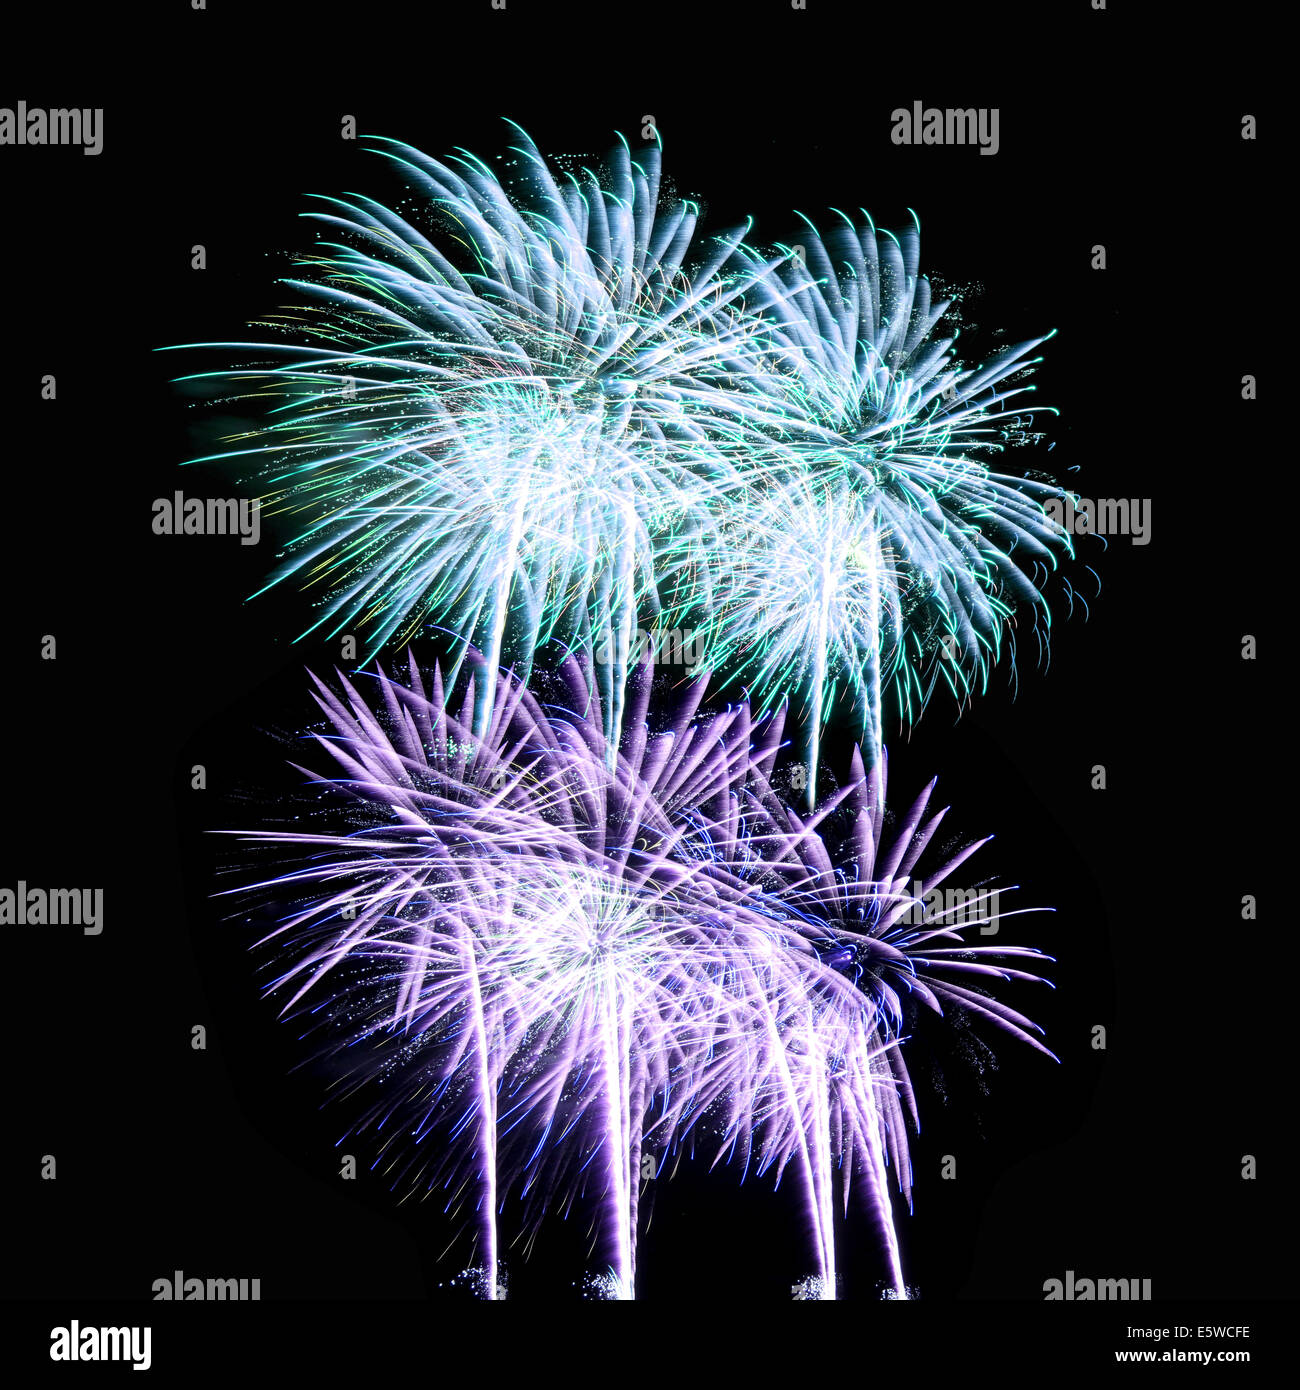 fireworks or firecracker on black background. Stock Photo